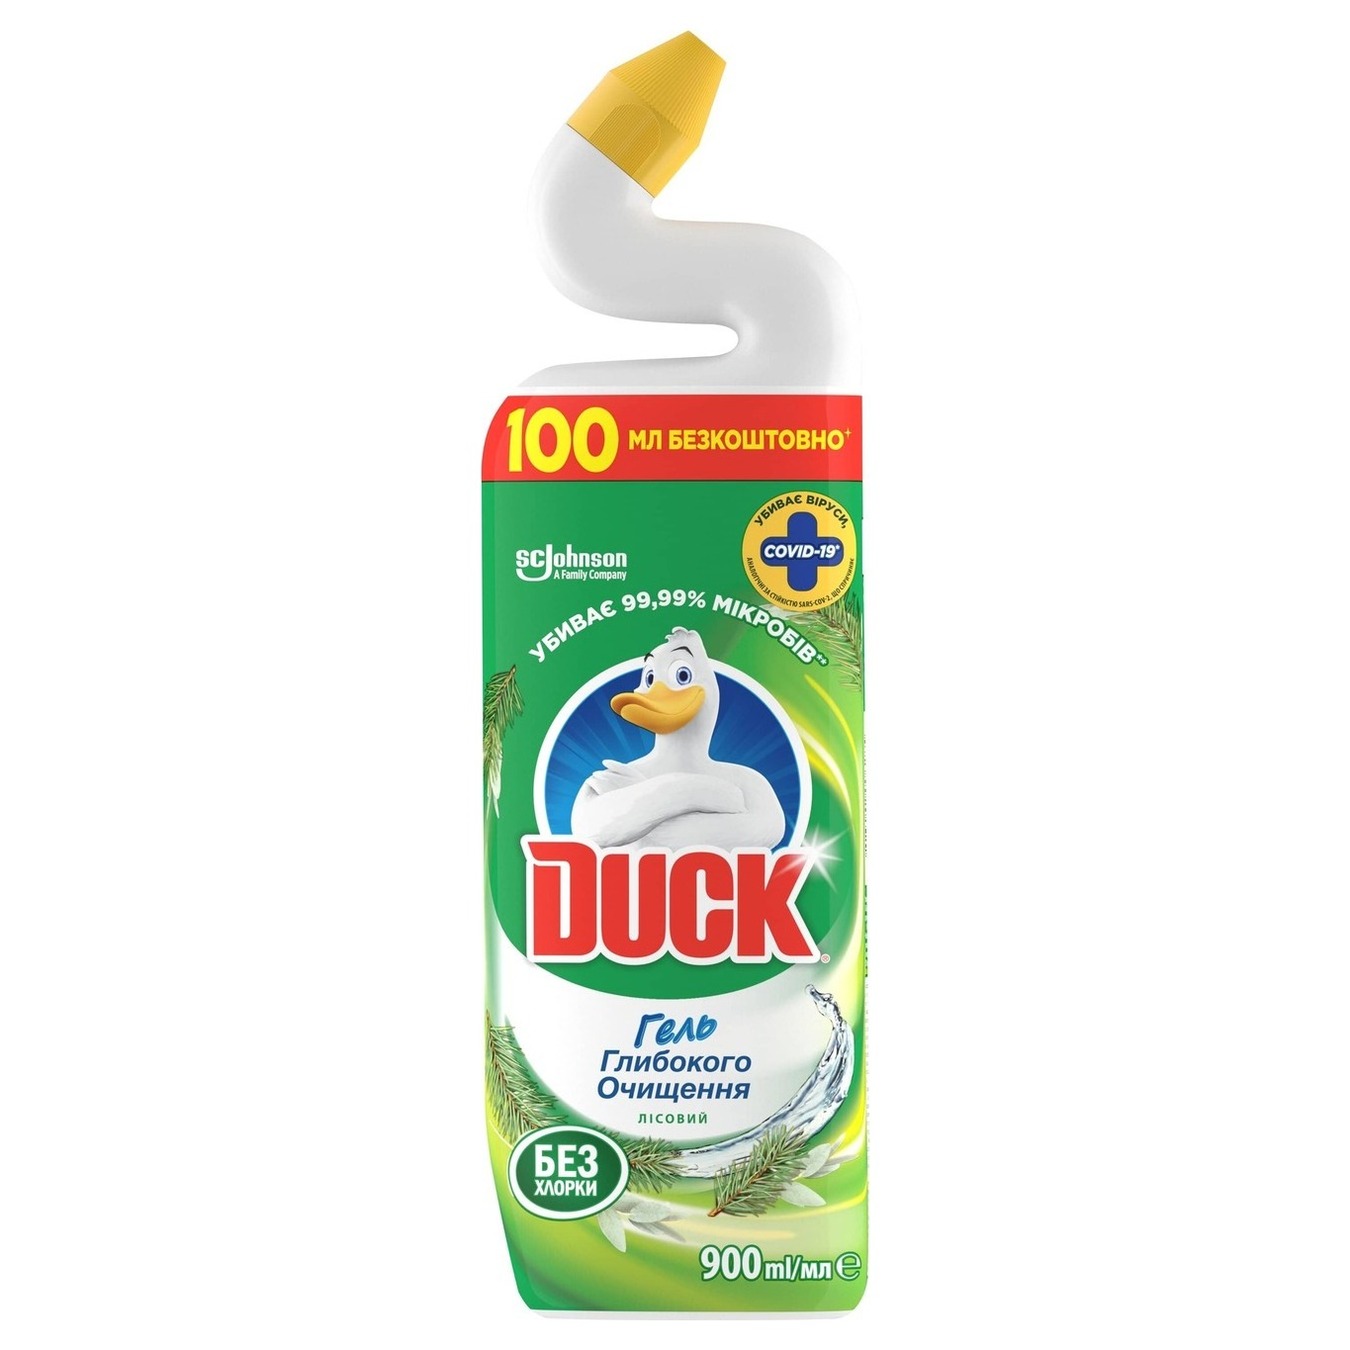 Toilet duck Toilet cleaner Hygiene Forest 900ml